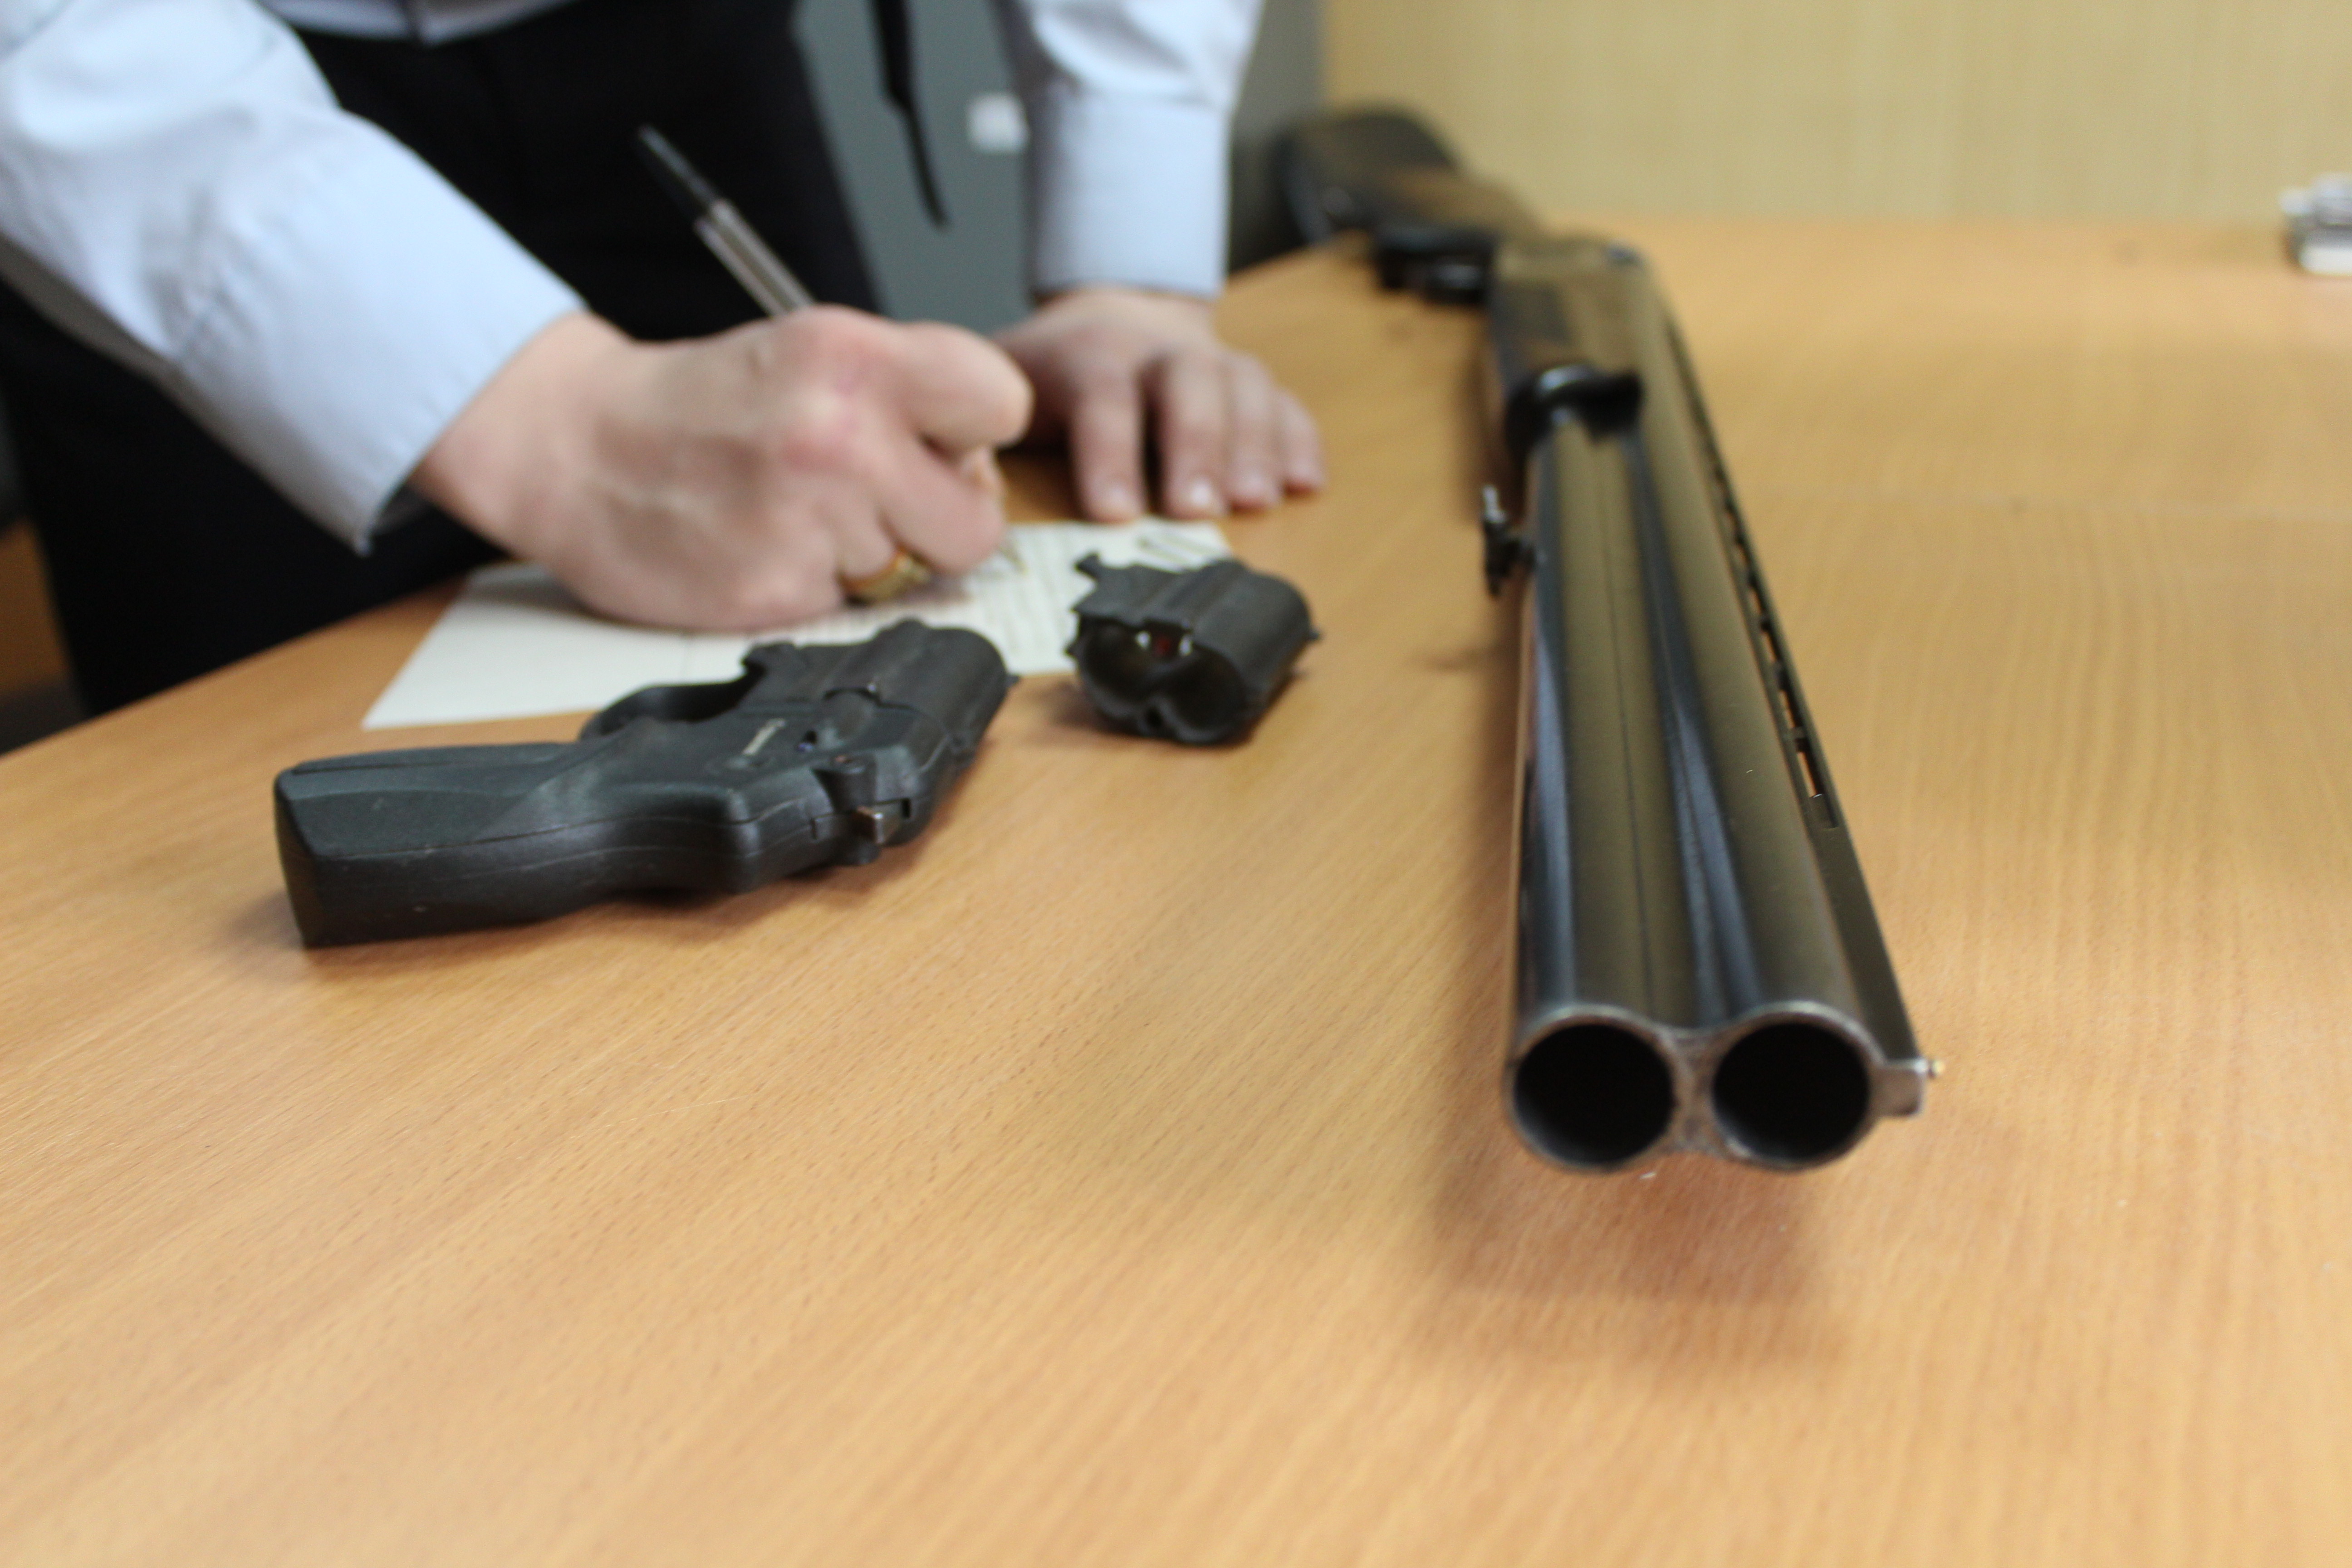 В сфере незаконного оборота оружия в Брянской области отмечена тенденция снижения